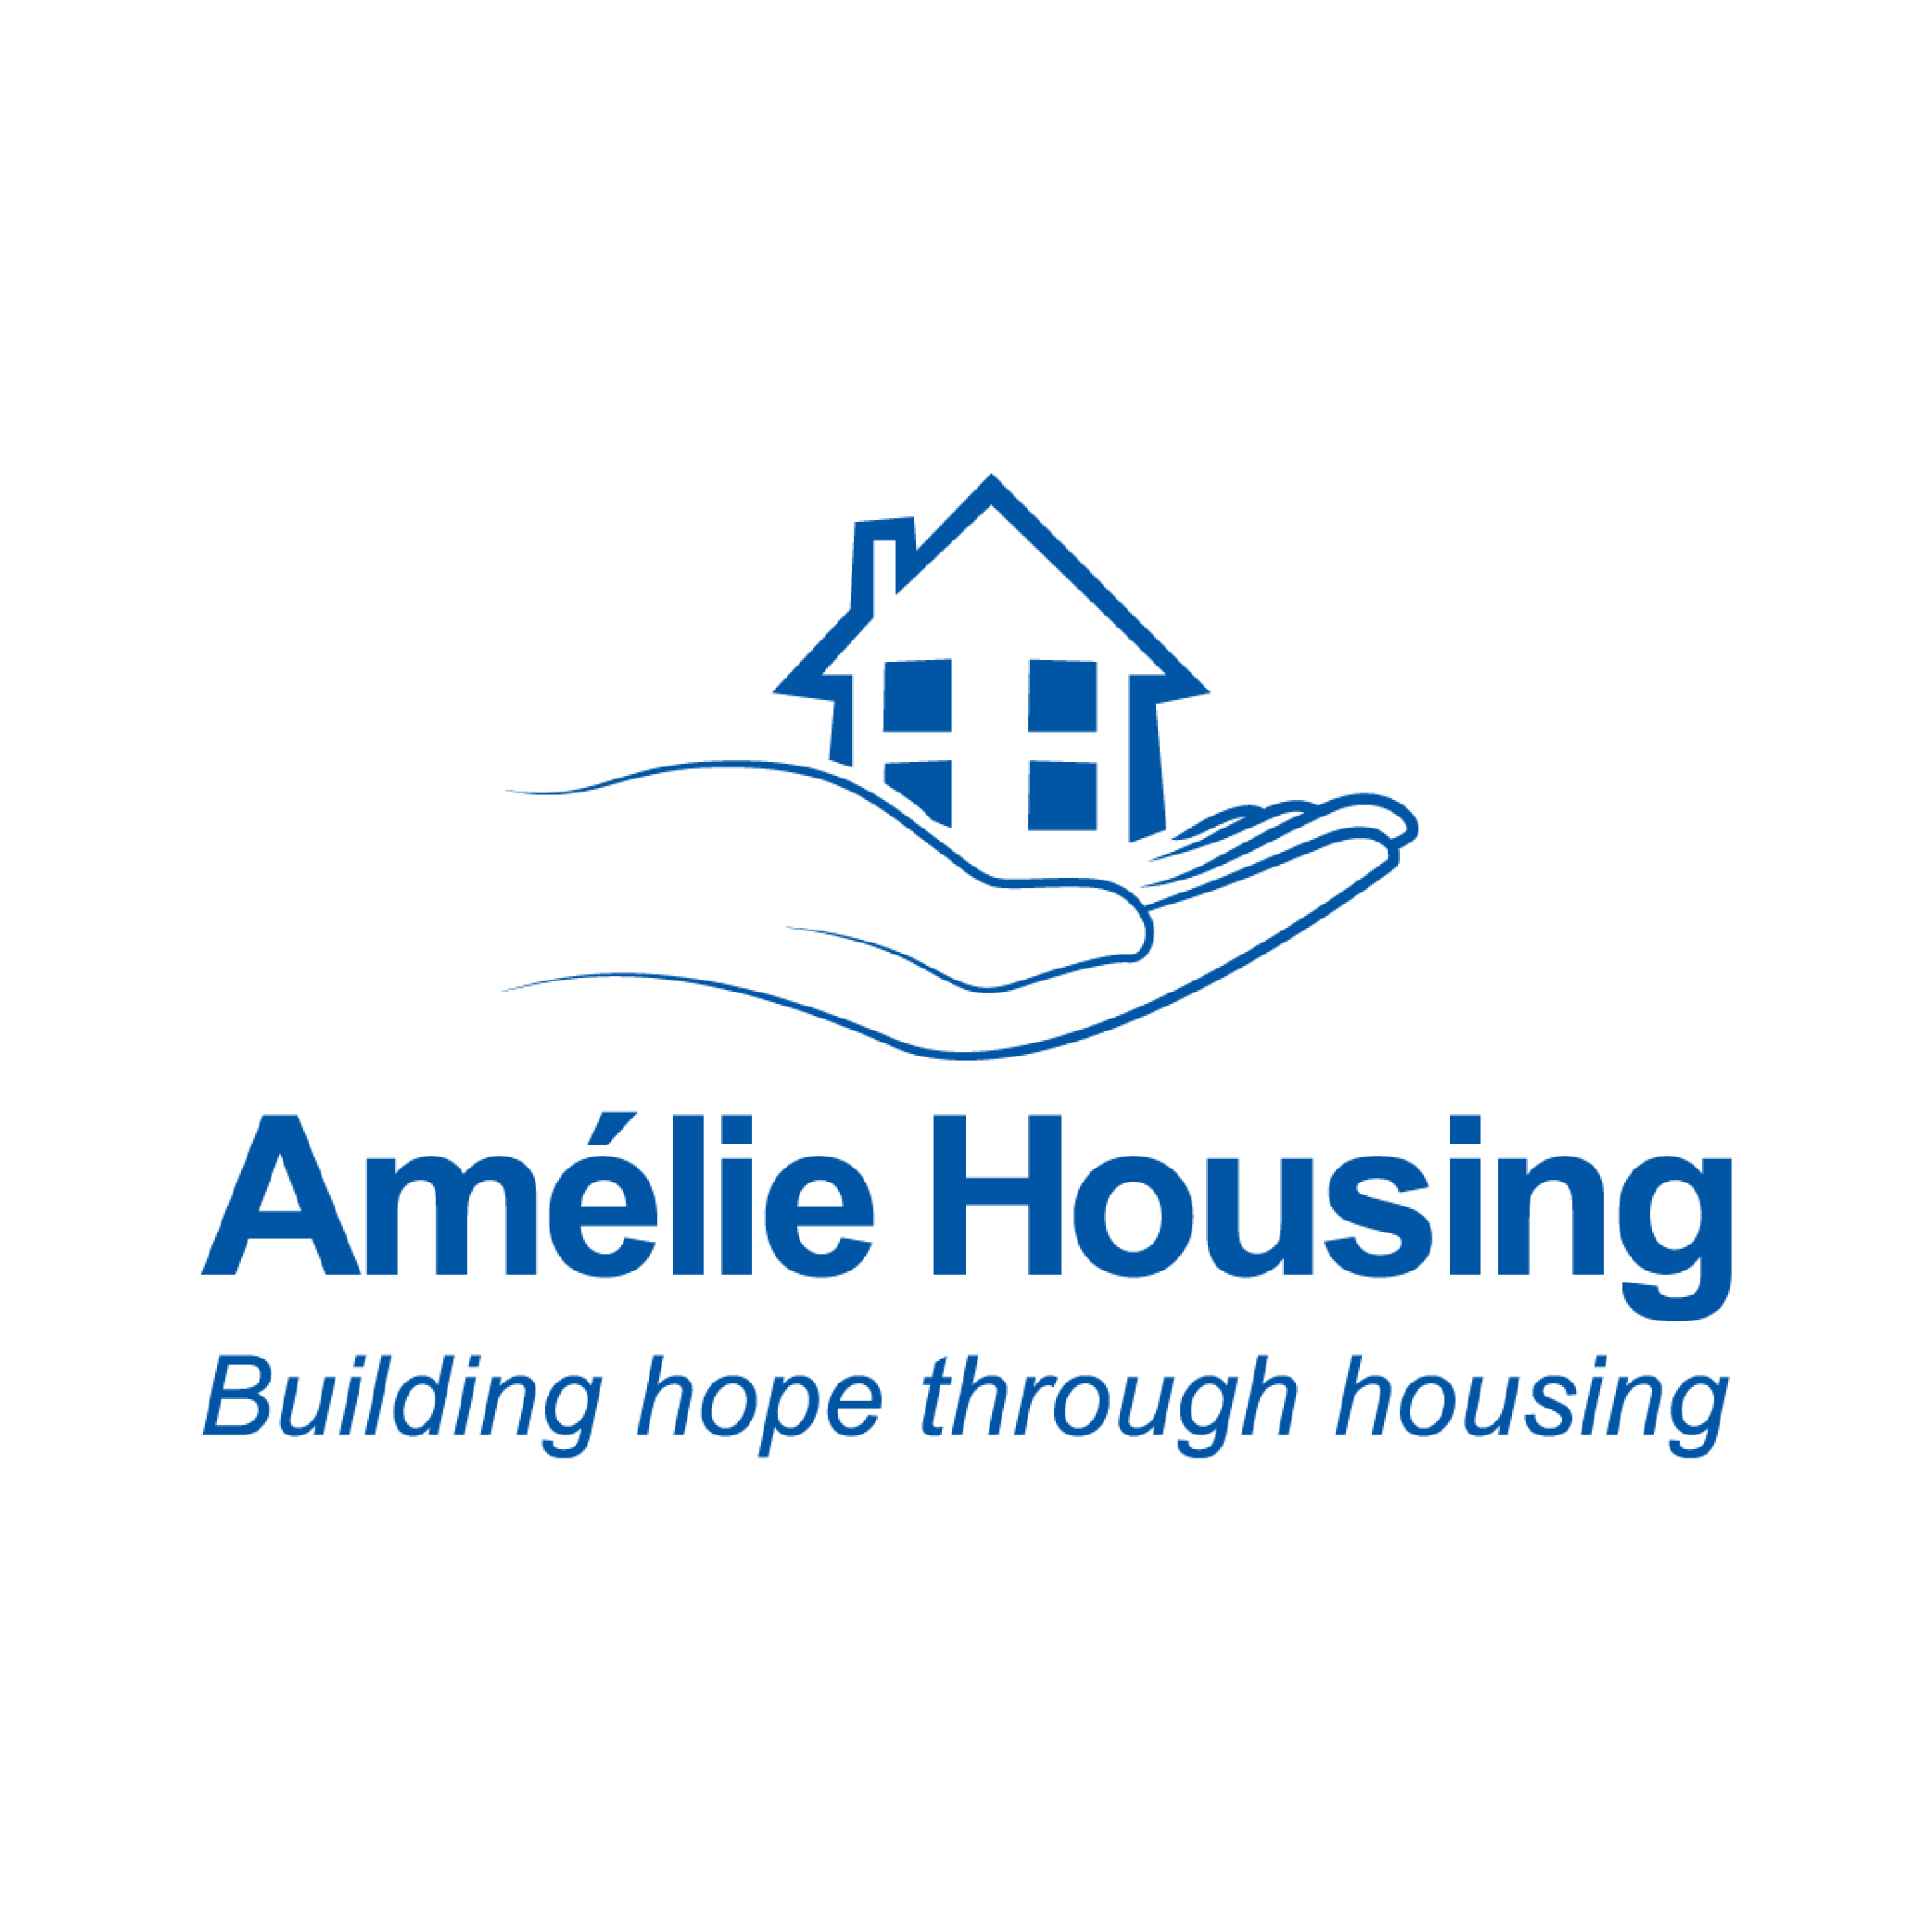 Amelie Housing: ‘building hope through housing’